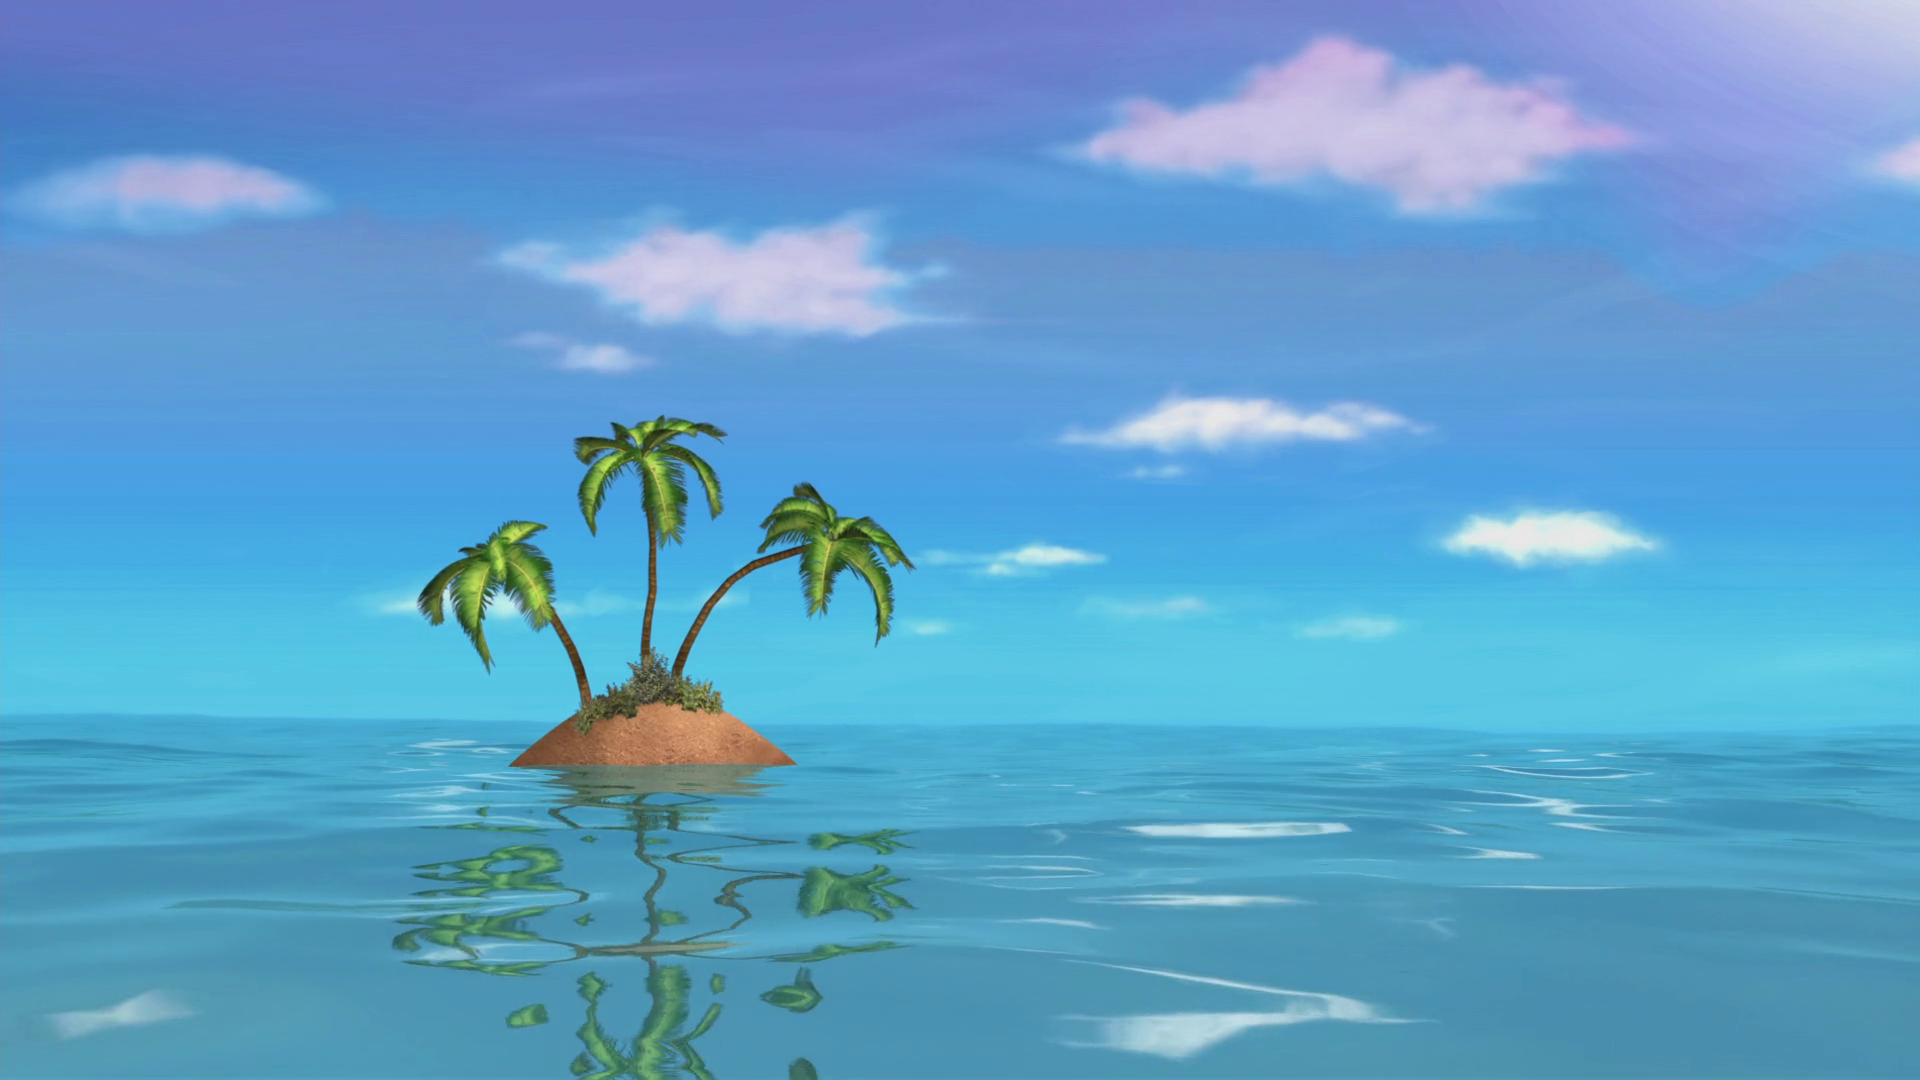 Bikini atoll spongebob